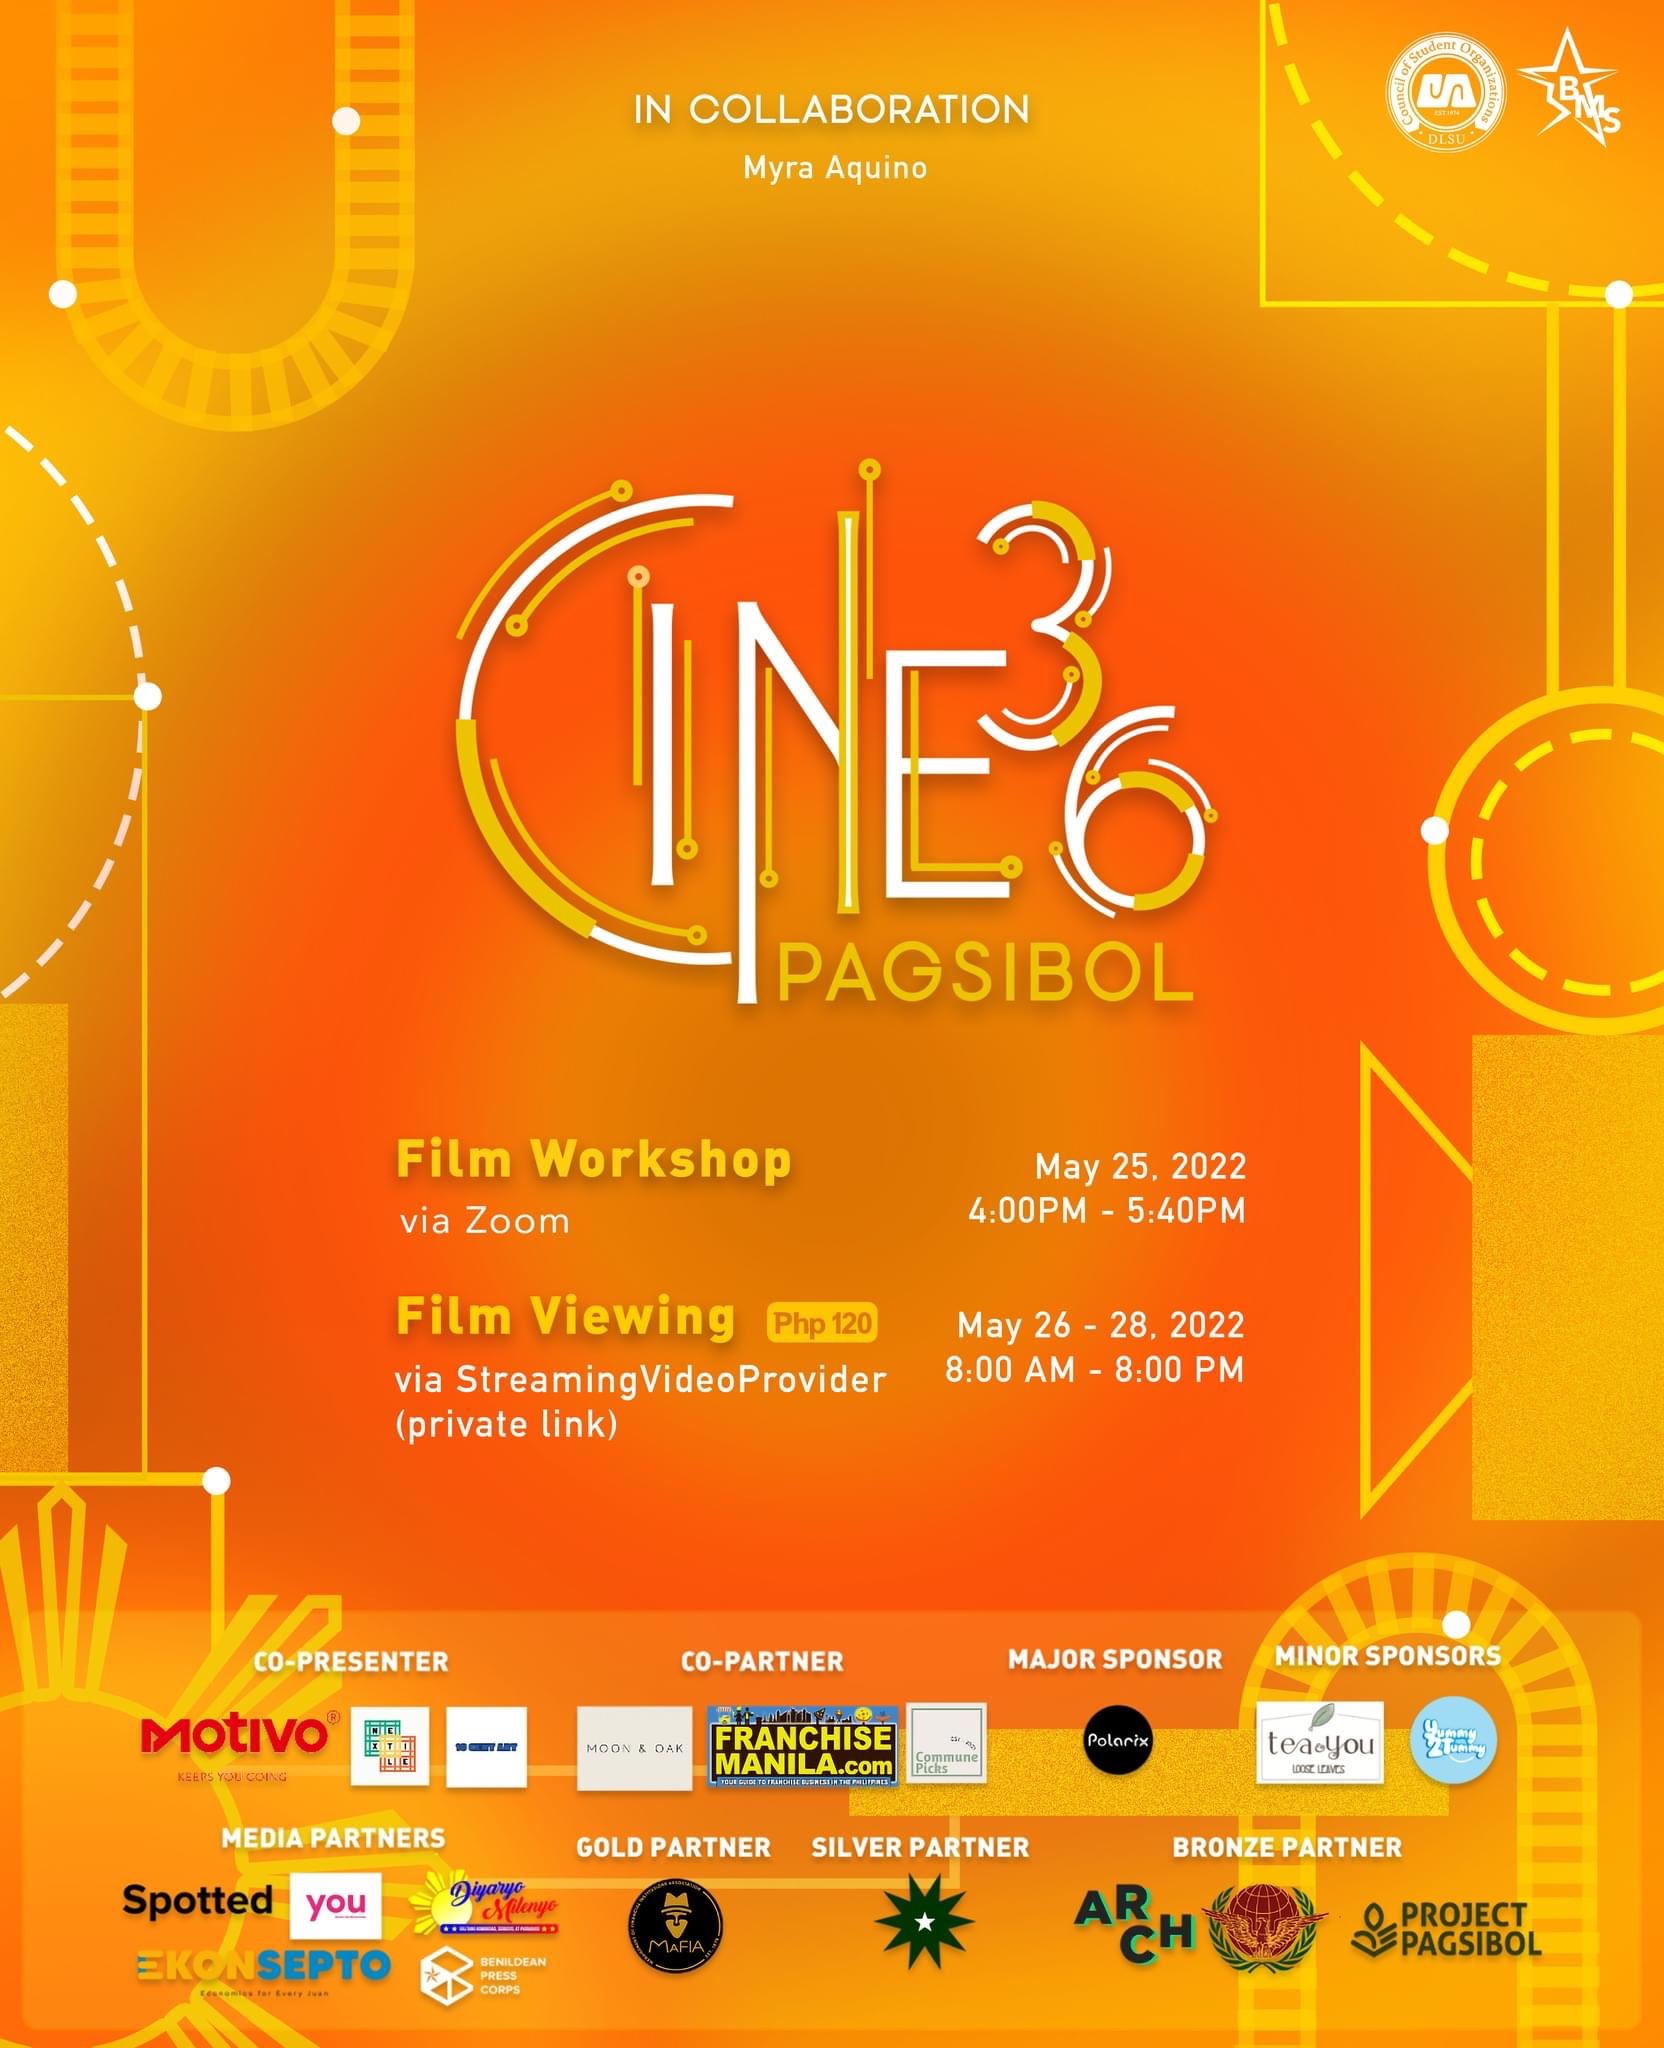 PRESS RELEASE: Cine 36—Pagsibol